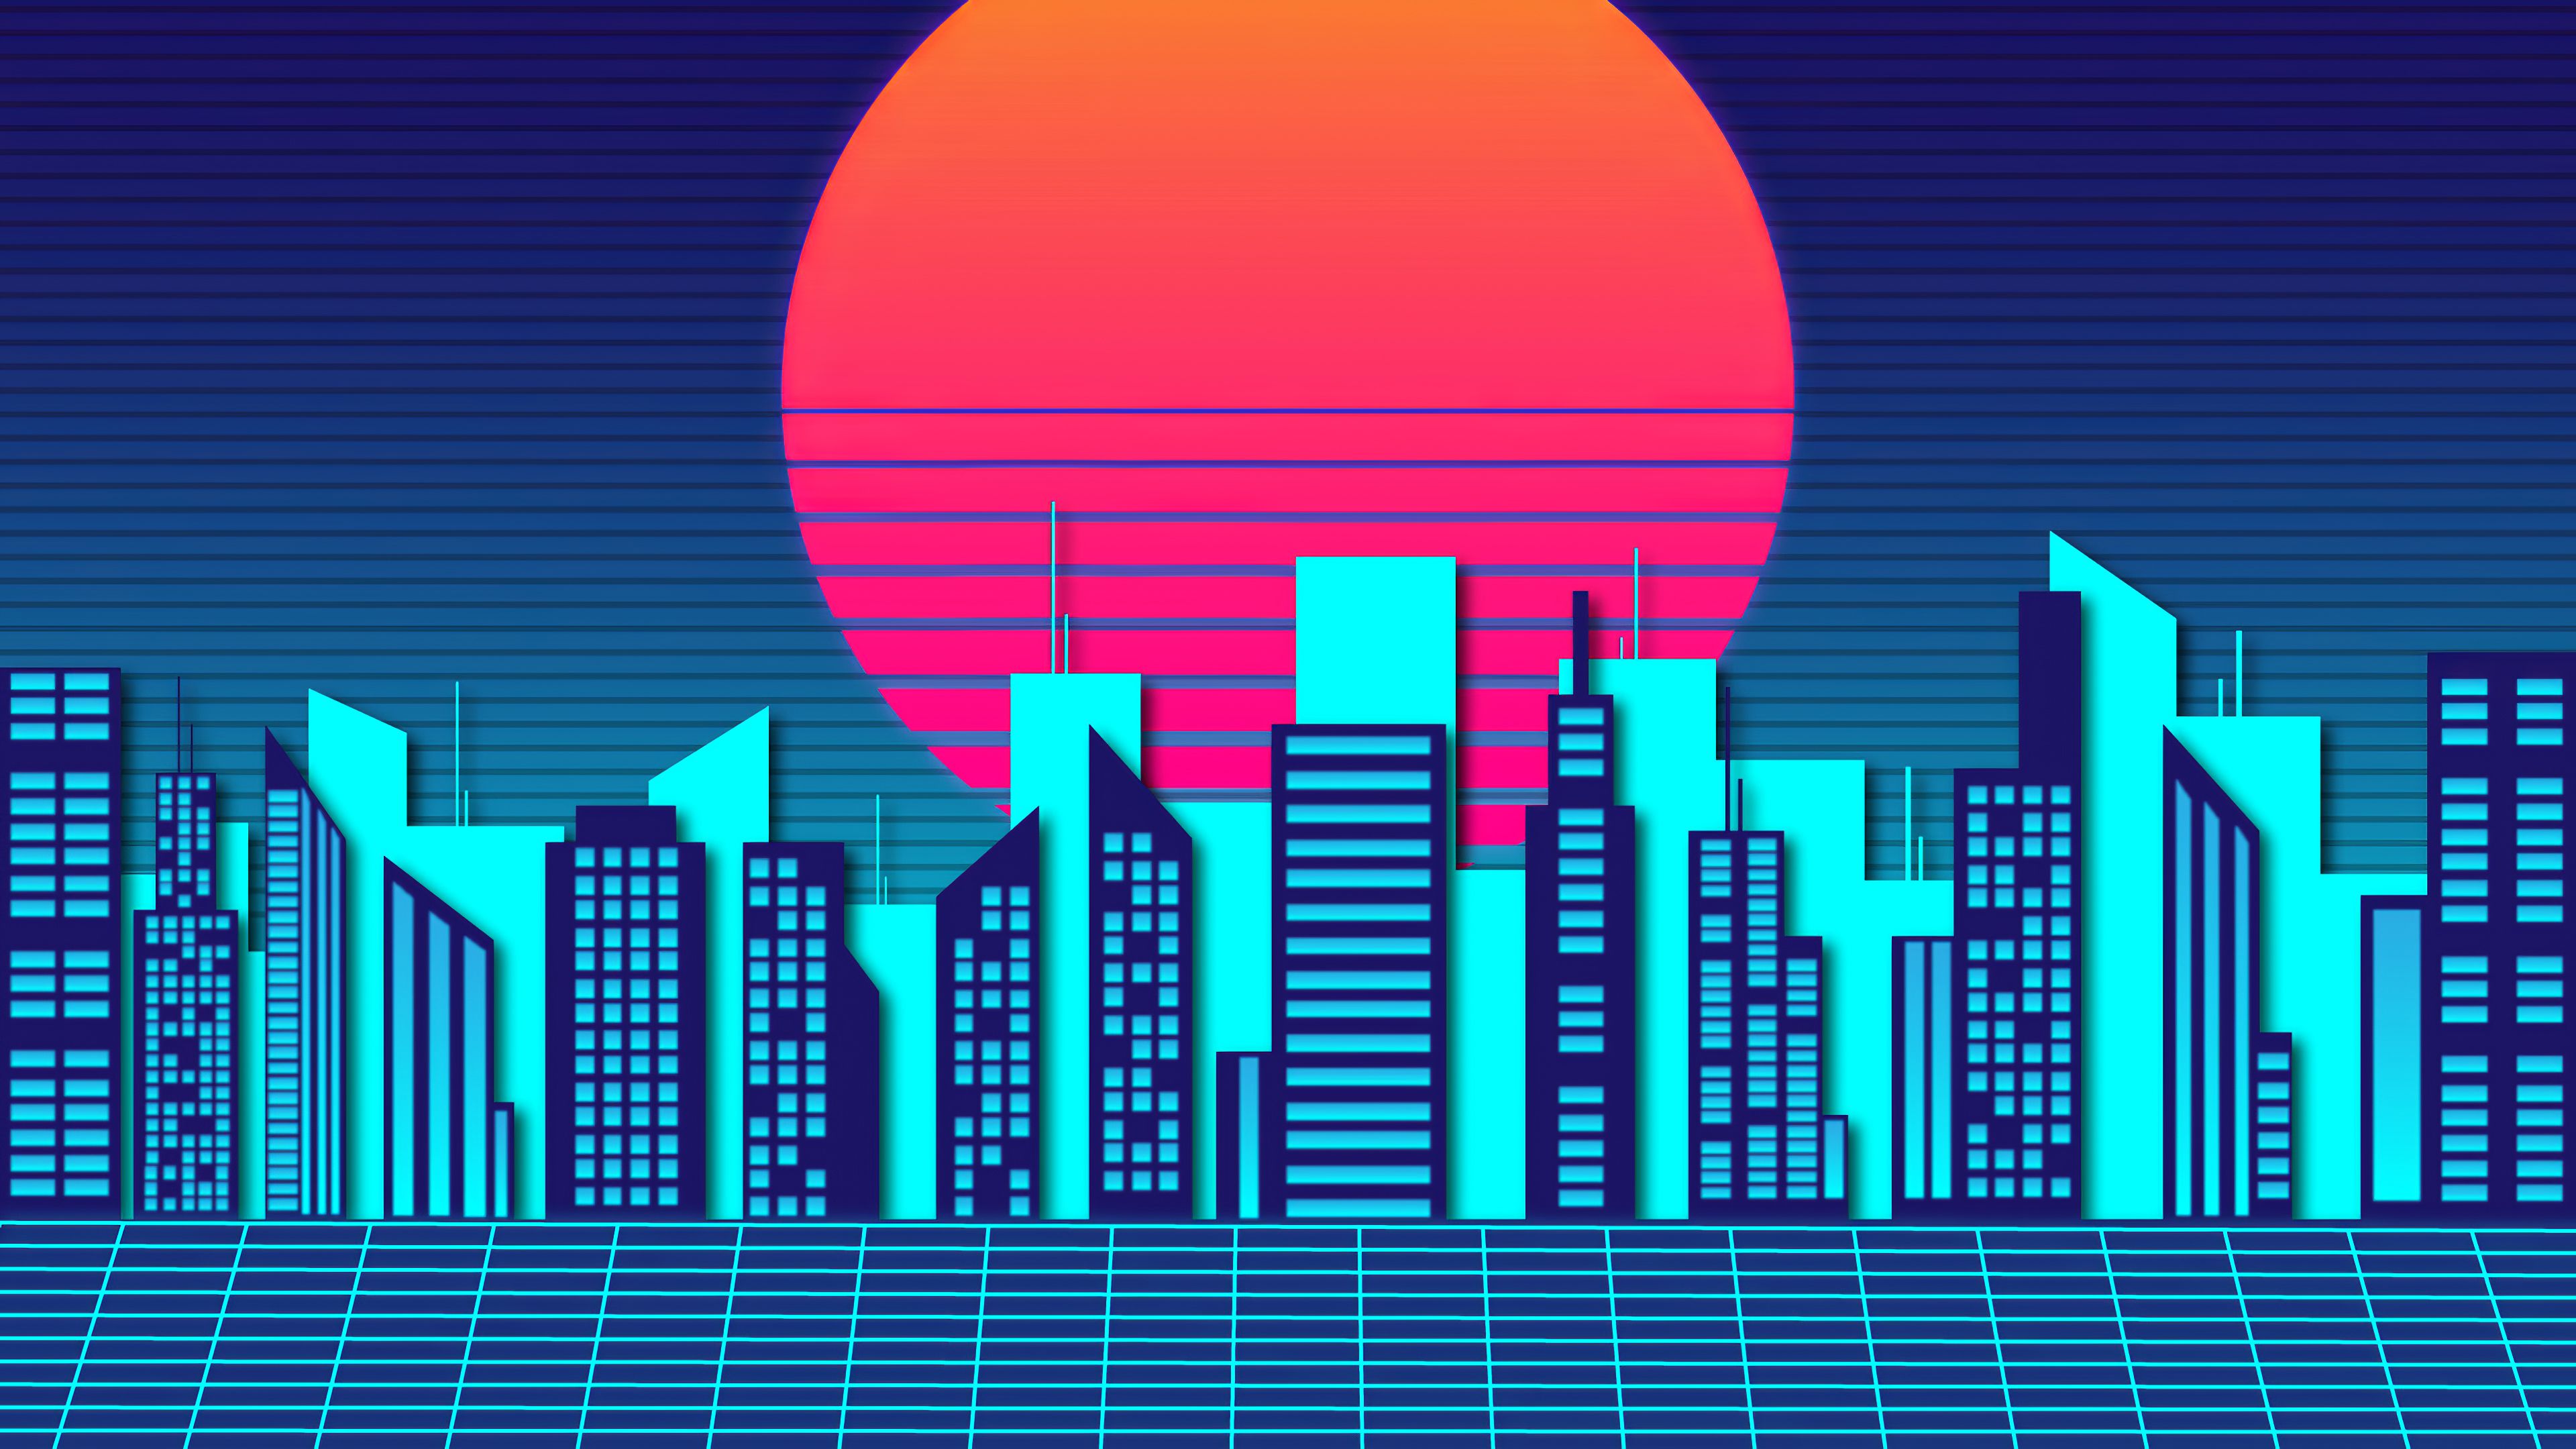 Retro City Wave 4k, HD Artist, 4k Wallpaper, Image, Background